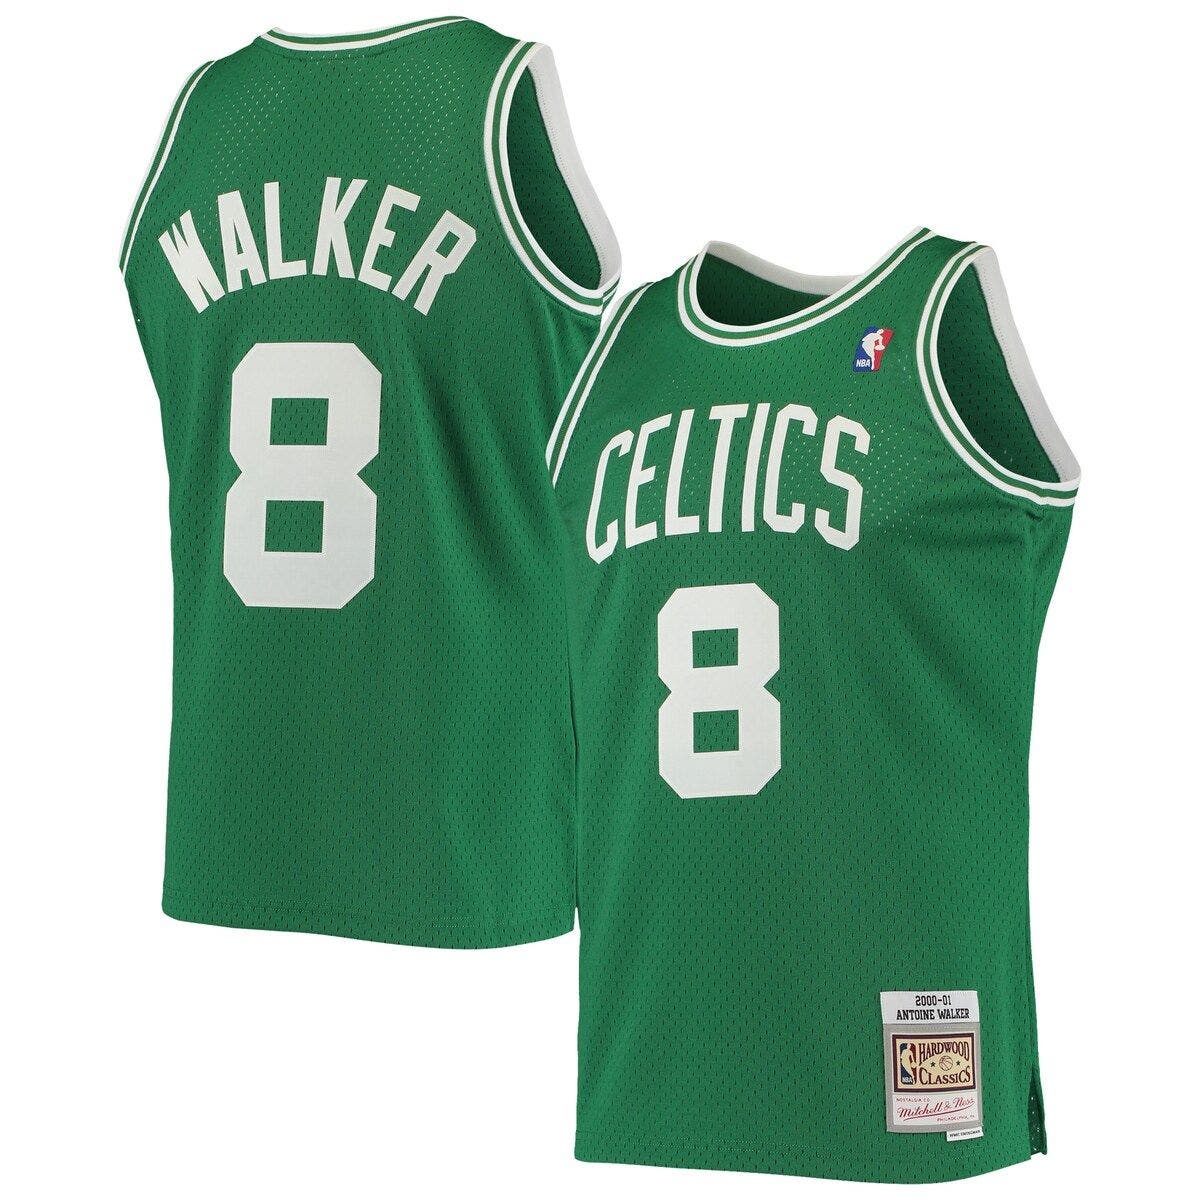 Classic Antoine Walker #8 Boston Celtics Basketball Jersey Stitched Green 